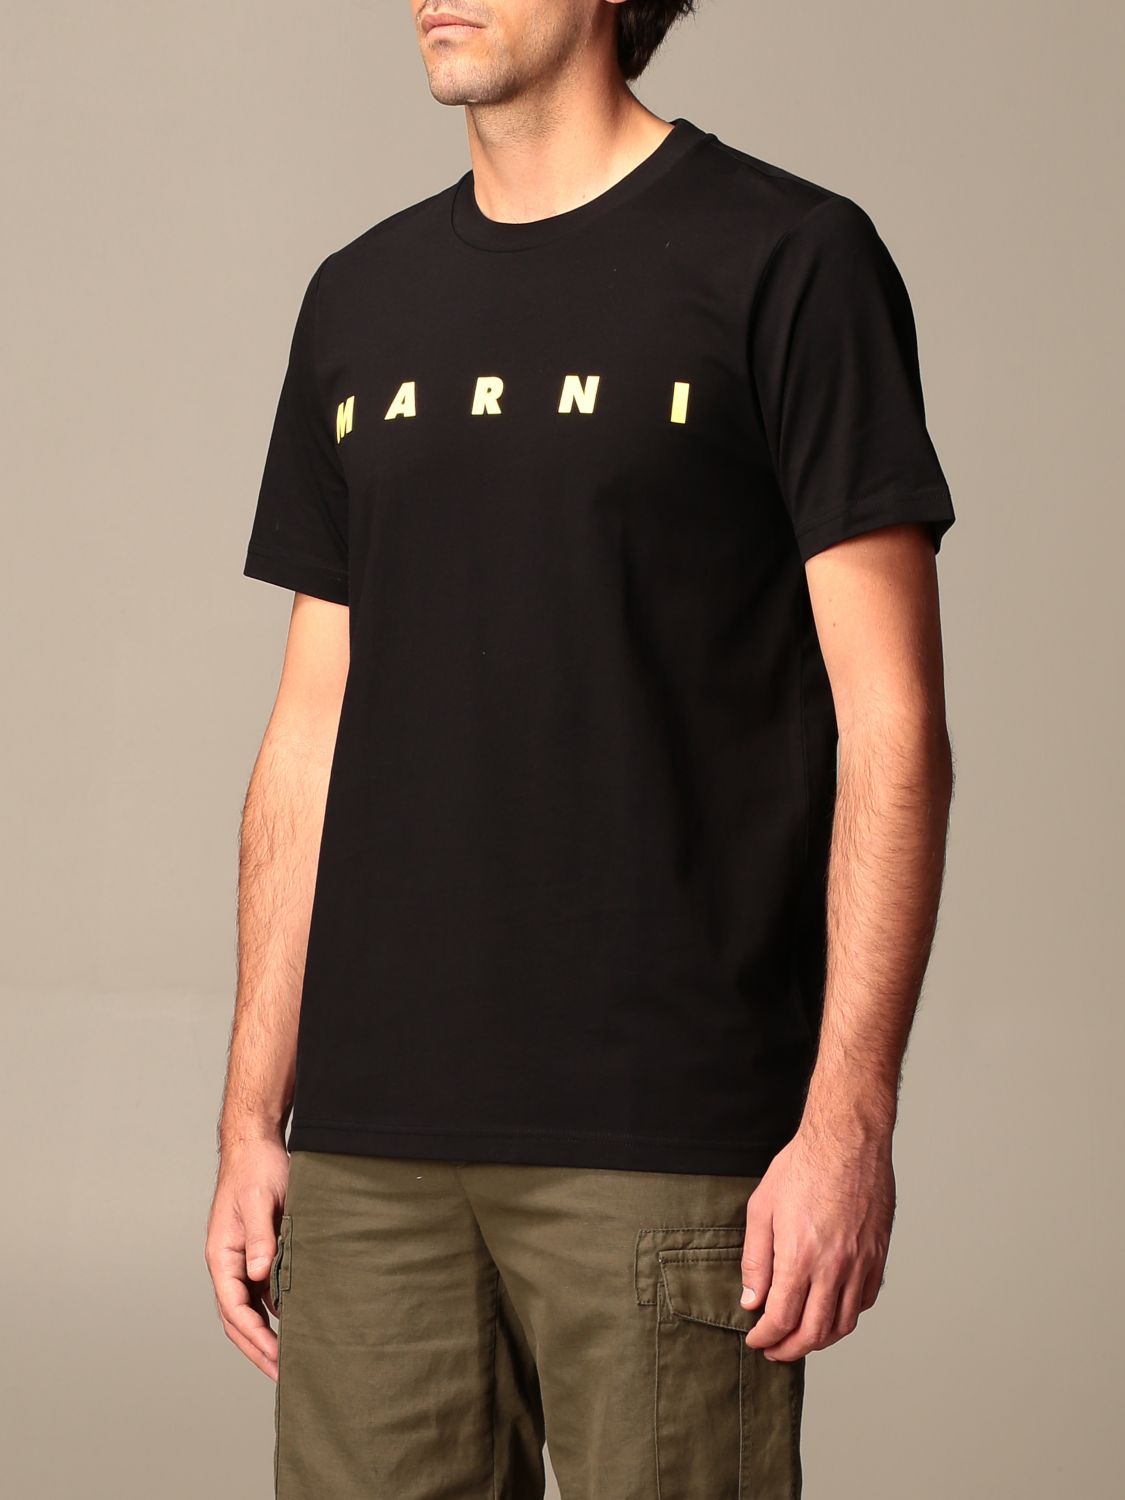 MARNI: cotton t-shirt with big logo - Black | T-Shirt Marni ...